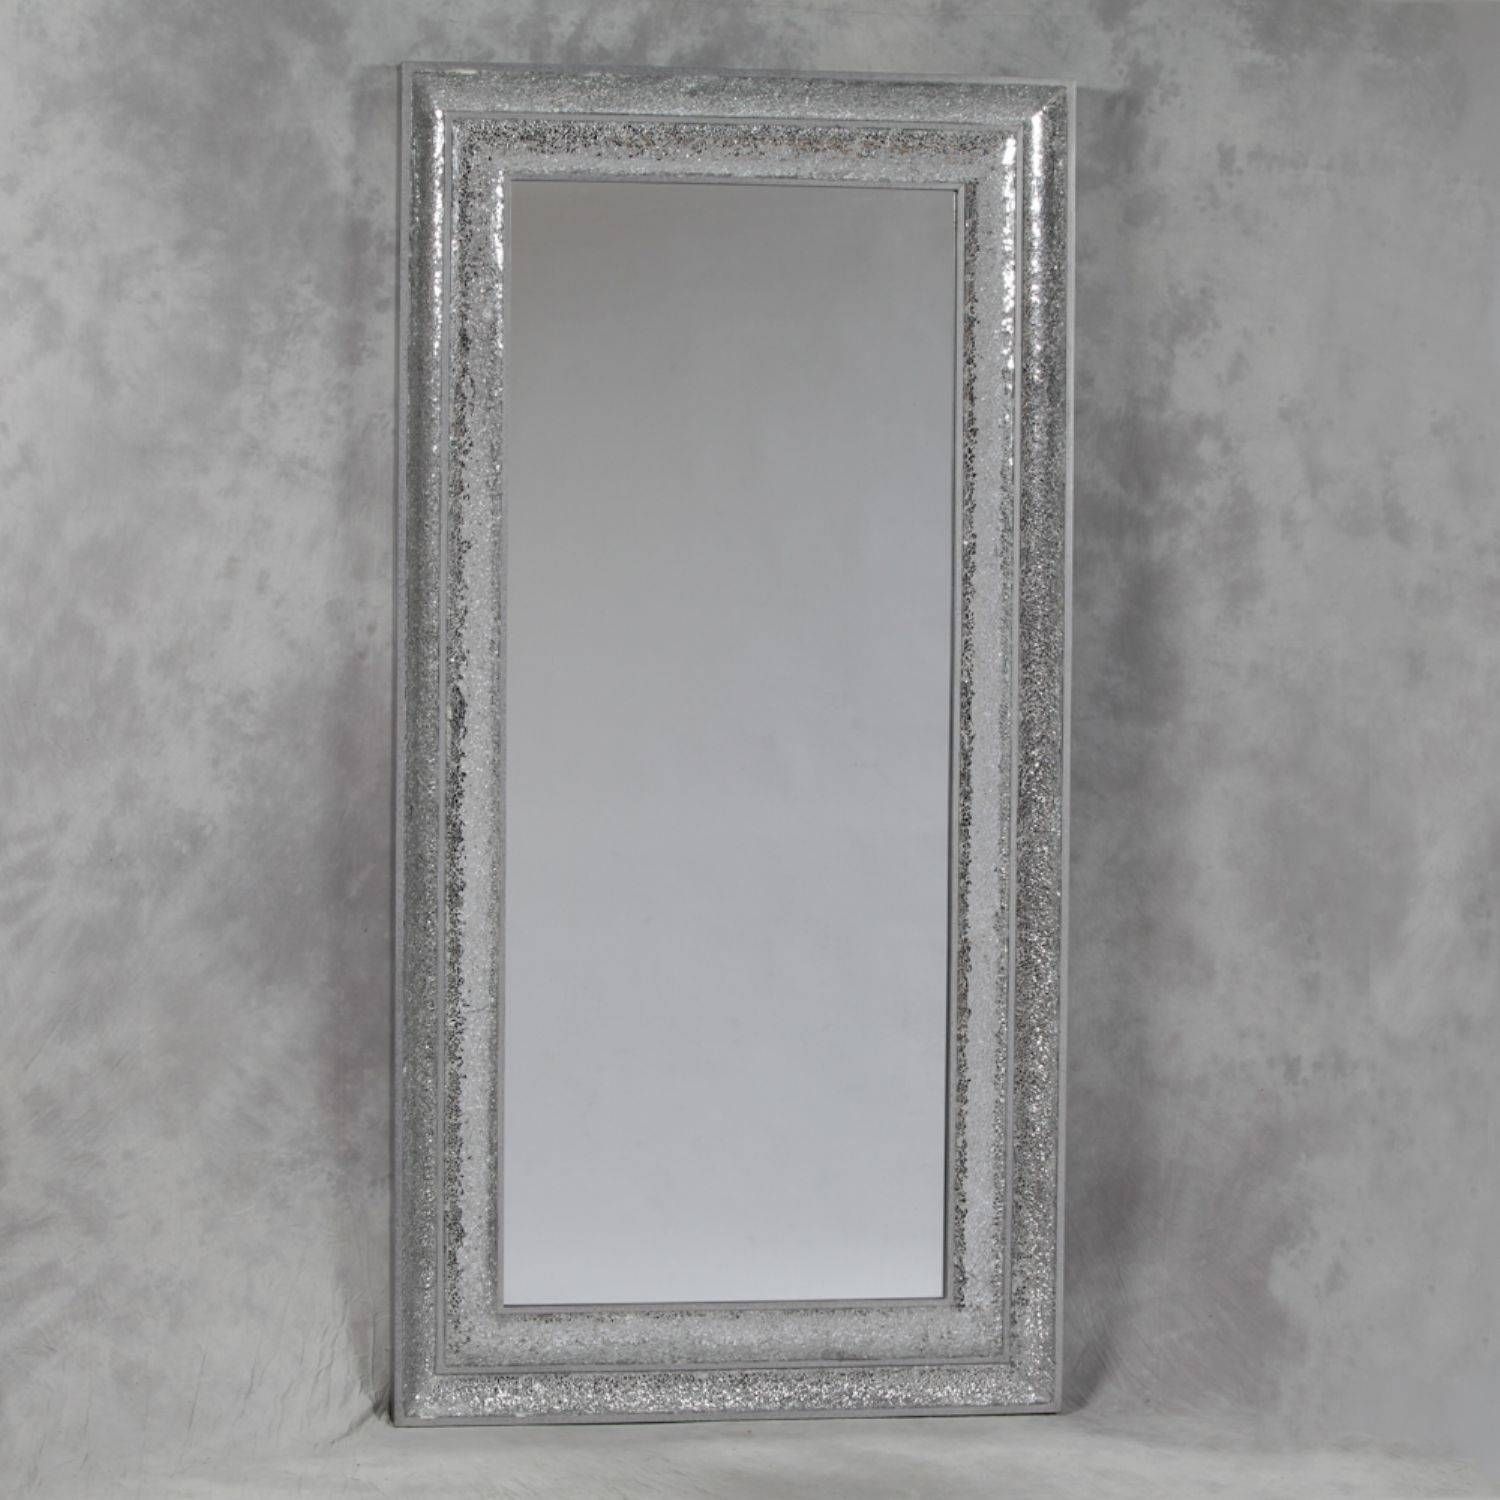 Large Rectangular Silver Crushed Glass Mosaic Mirror With Regard To Rectangular Silver Mirrors (View 6 of 15)